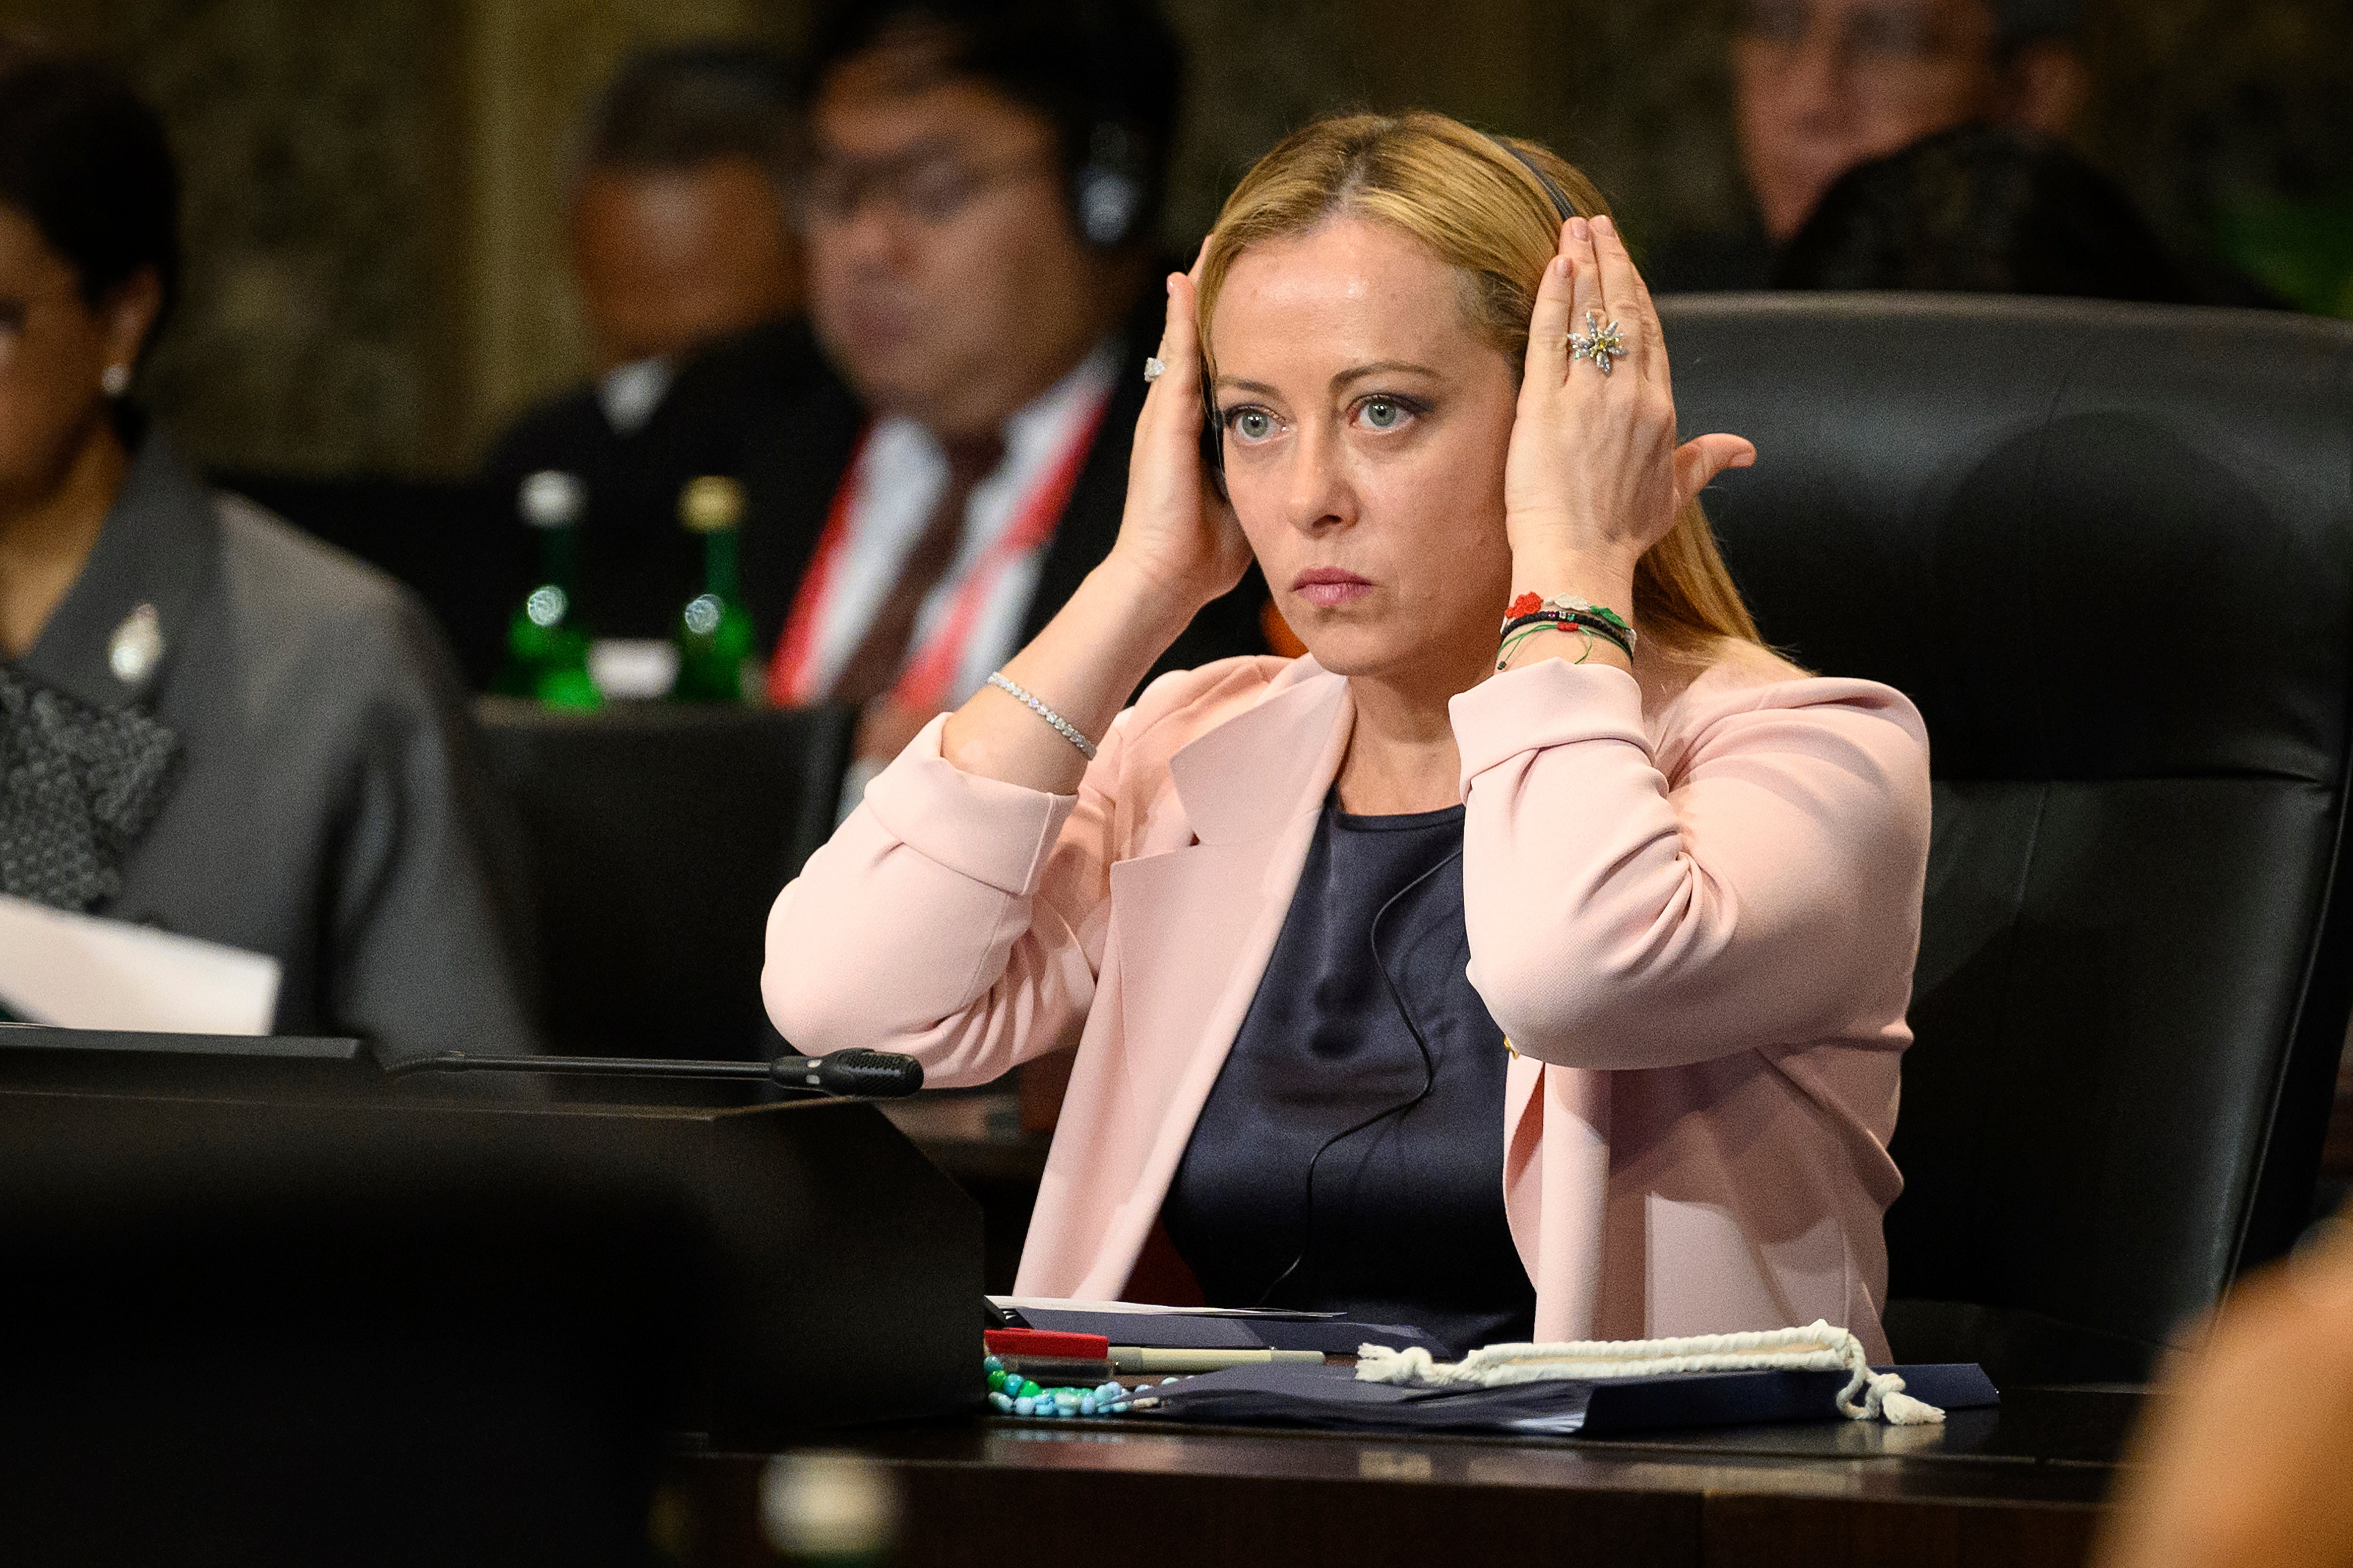 Italy’s prime minister Giorgia Meloni sued Saviano for libel damage